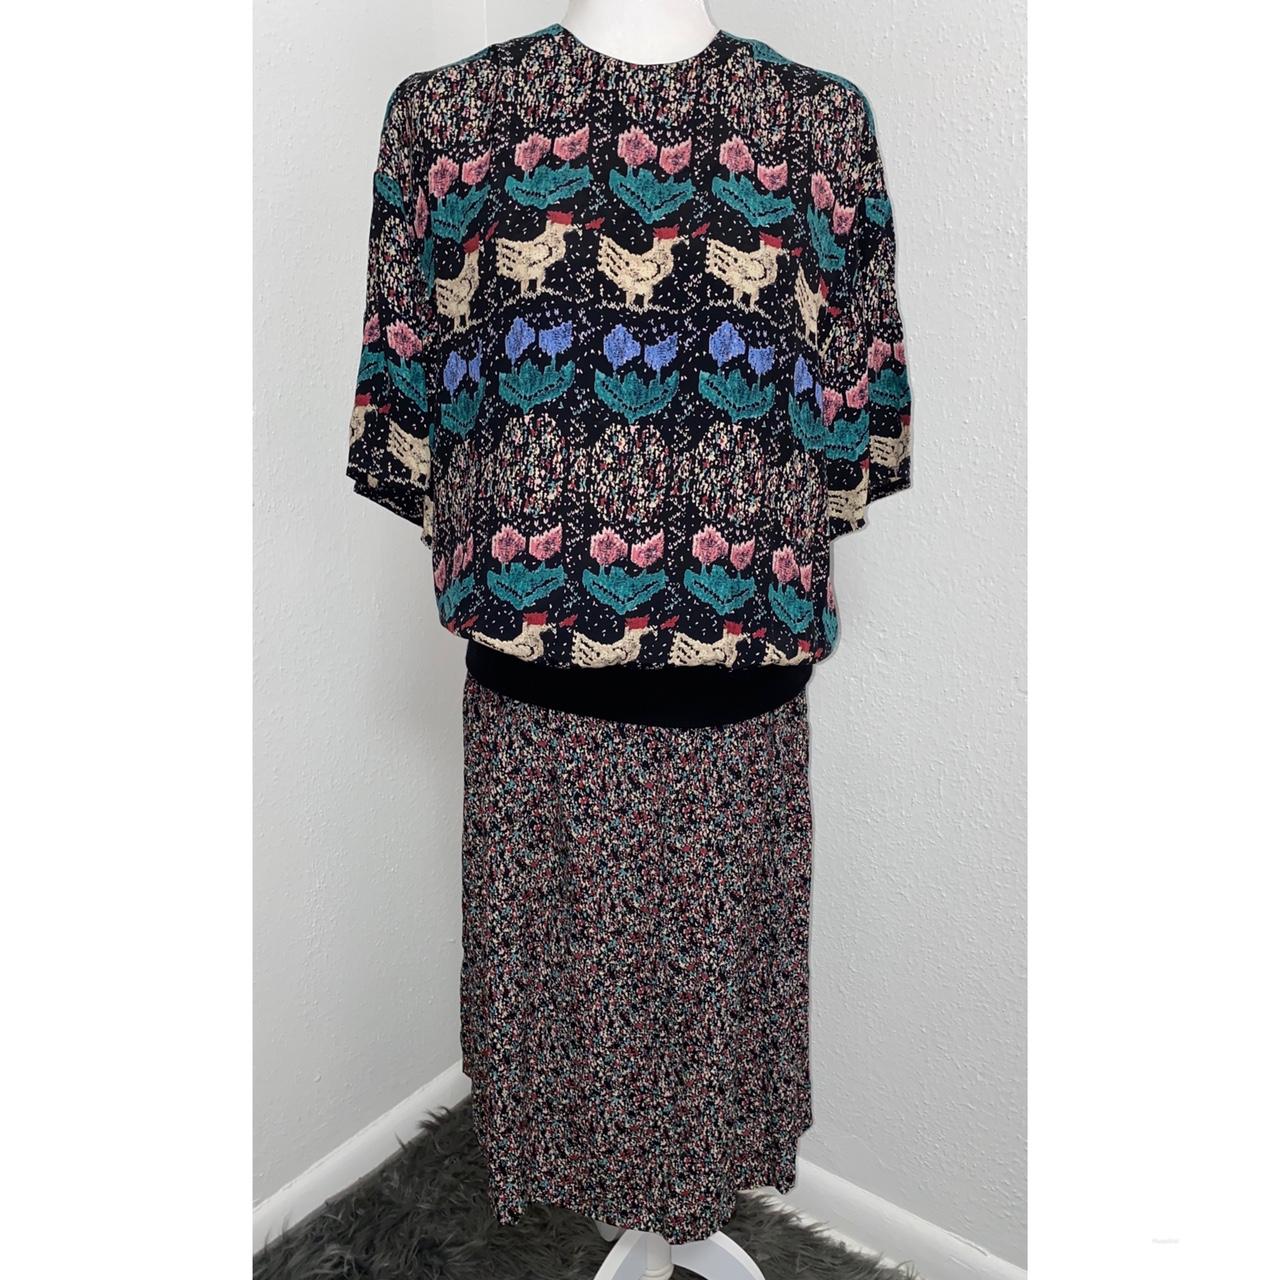 Product Image 1 - Vintage Dress
•Brand Phoebe 
•Labeled Size